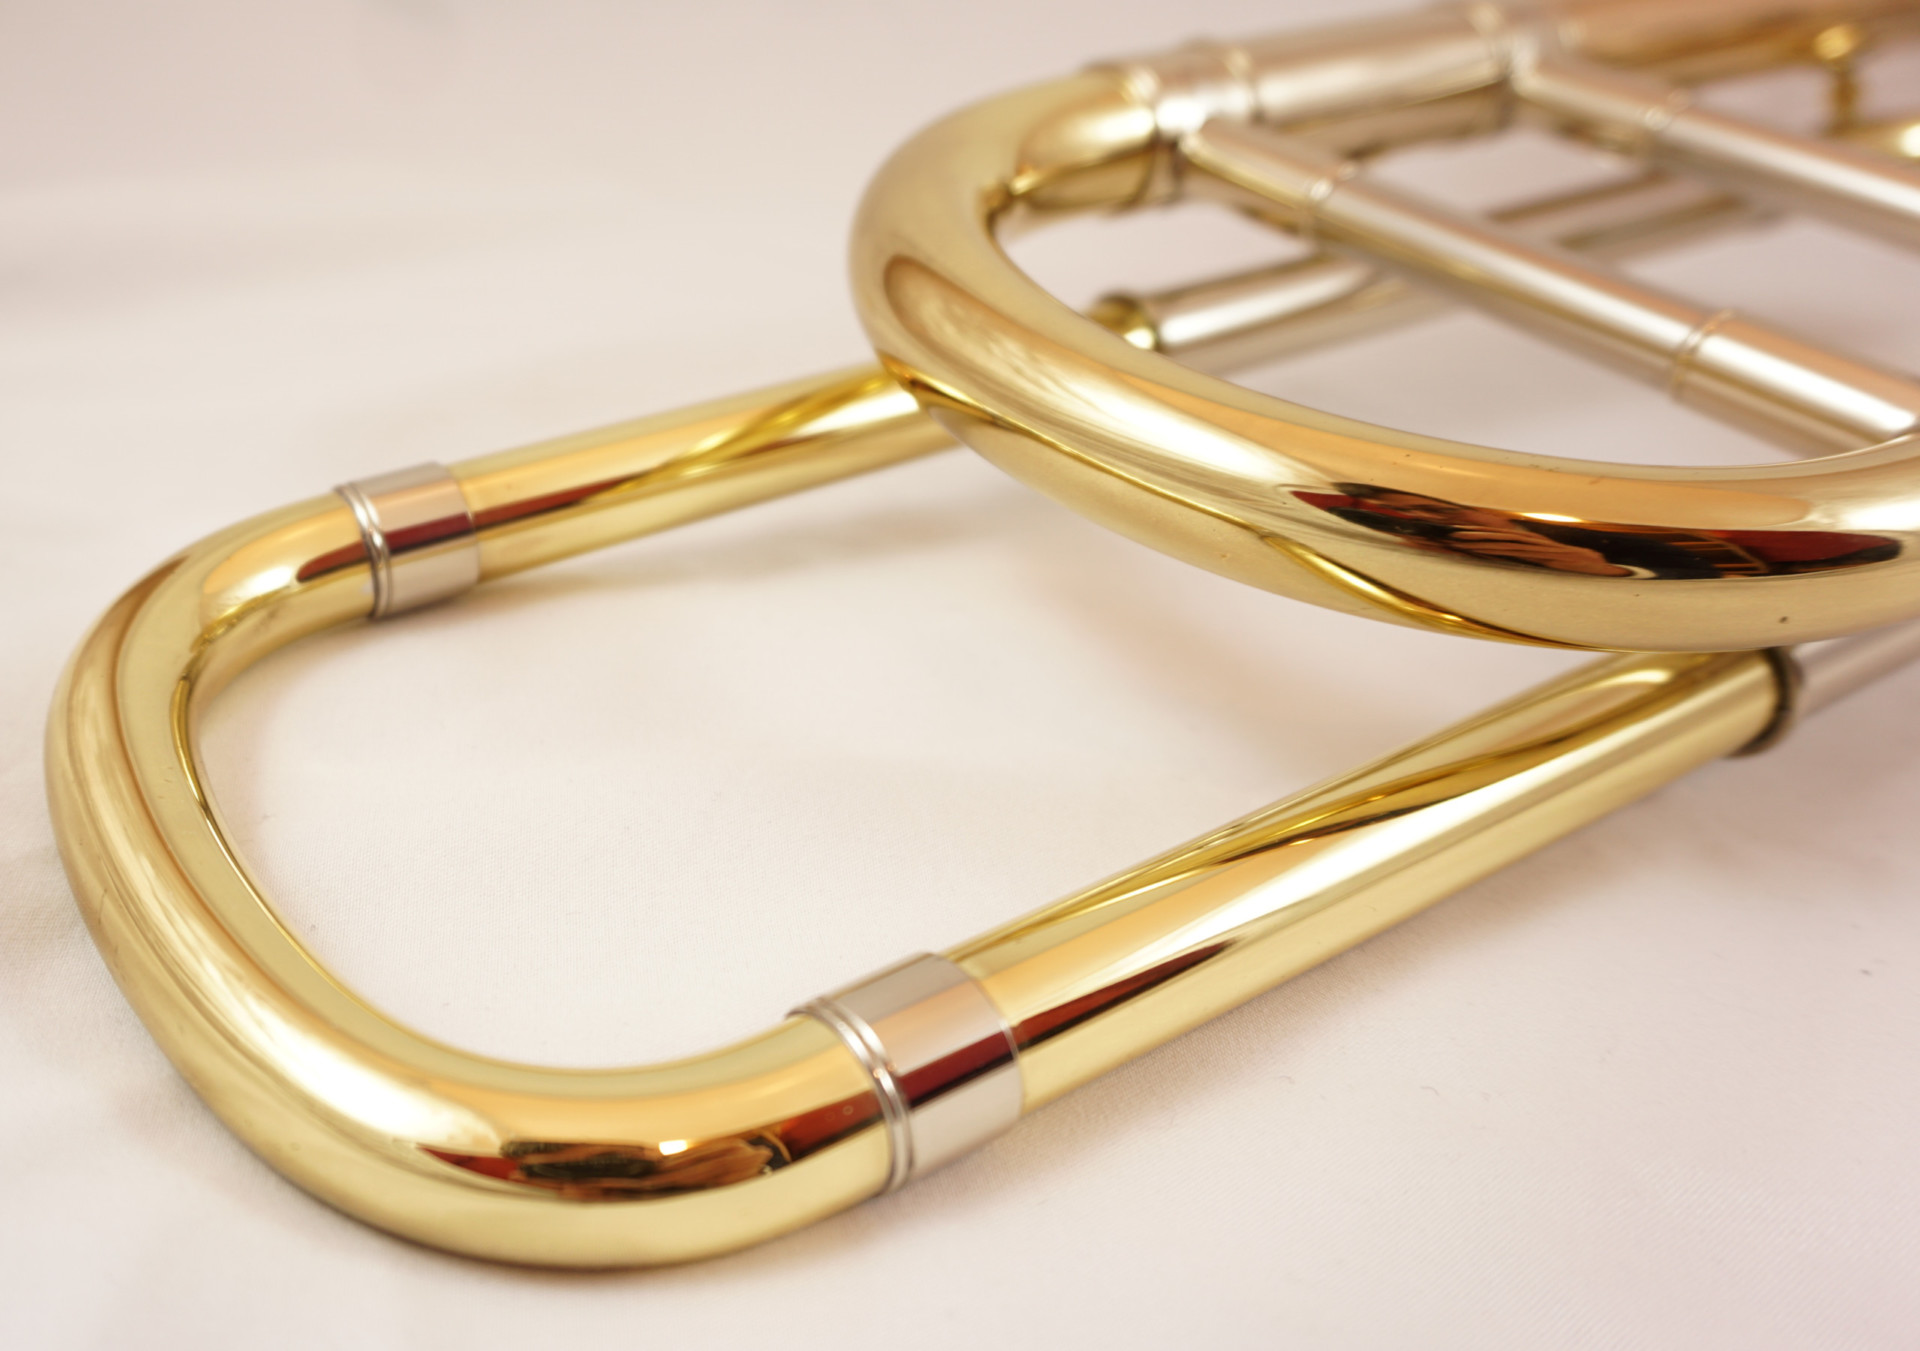 Bach 42BO with gold brass bell - Swisstbone